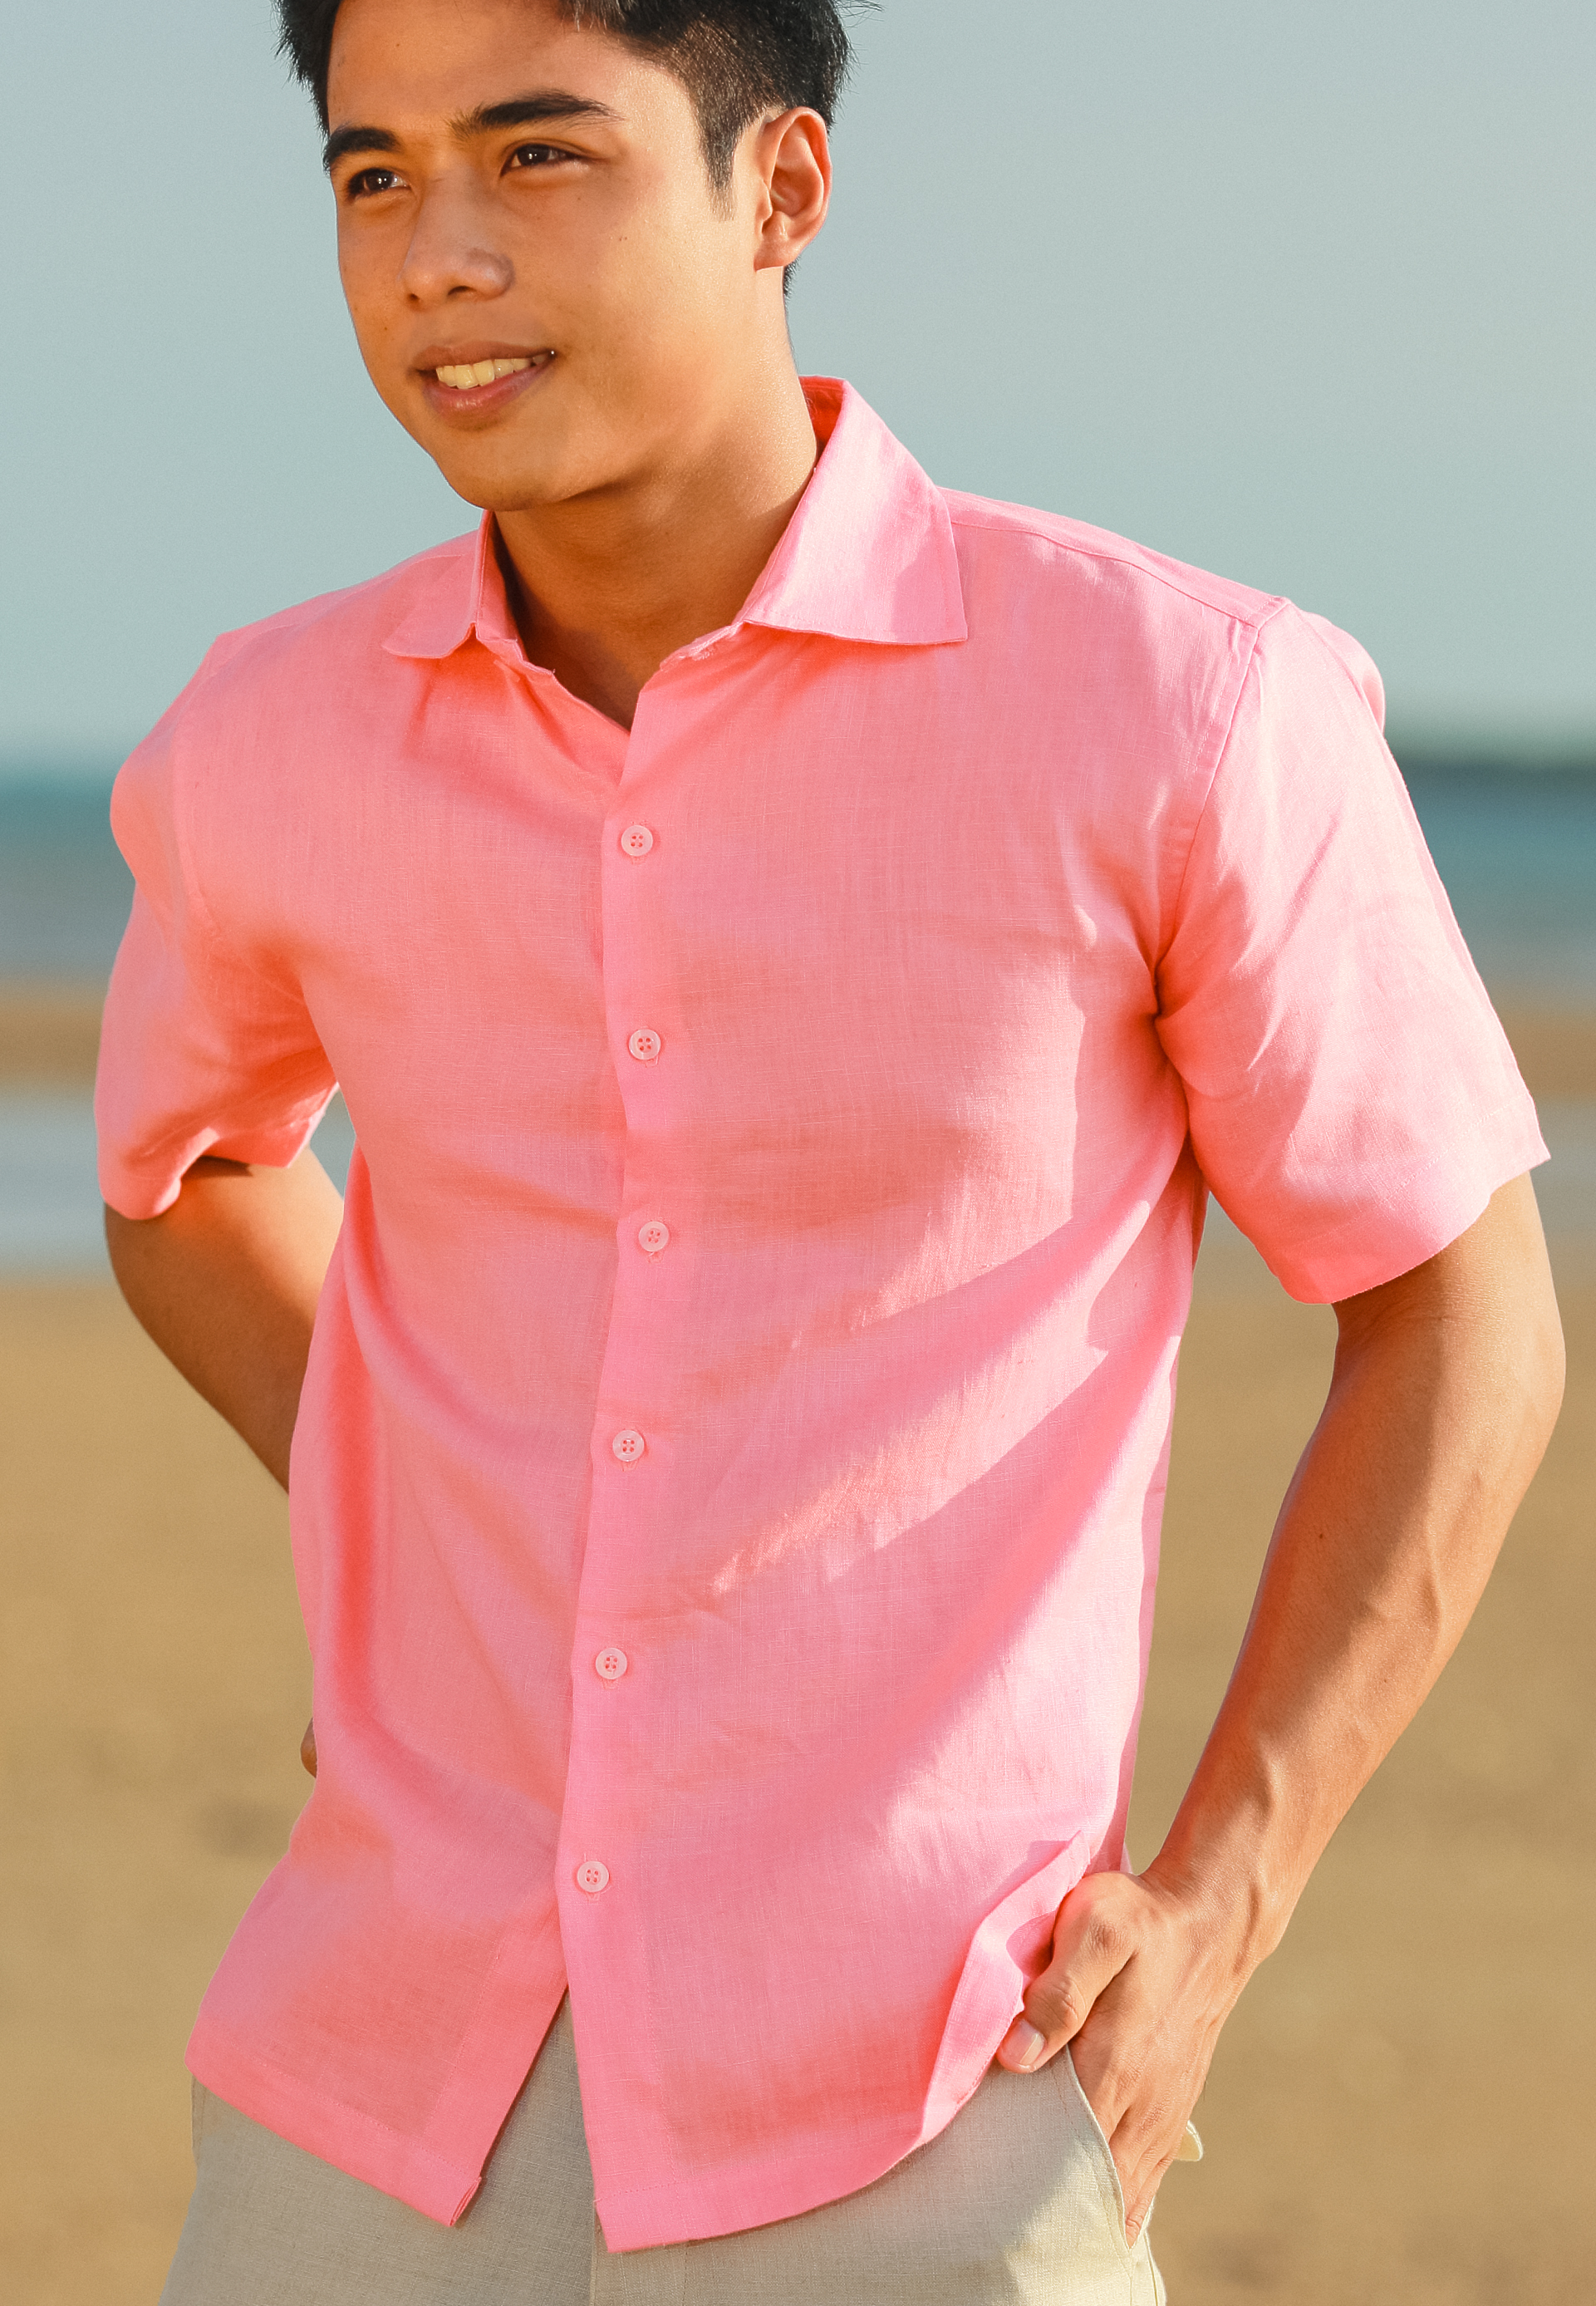 aqua beach dress shirts for men